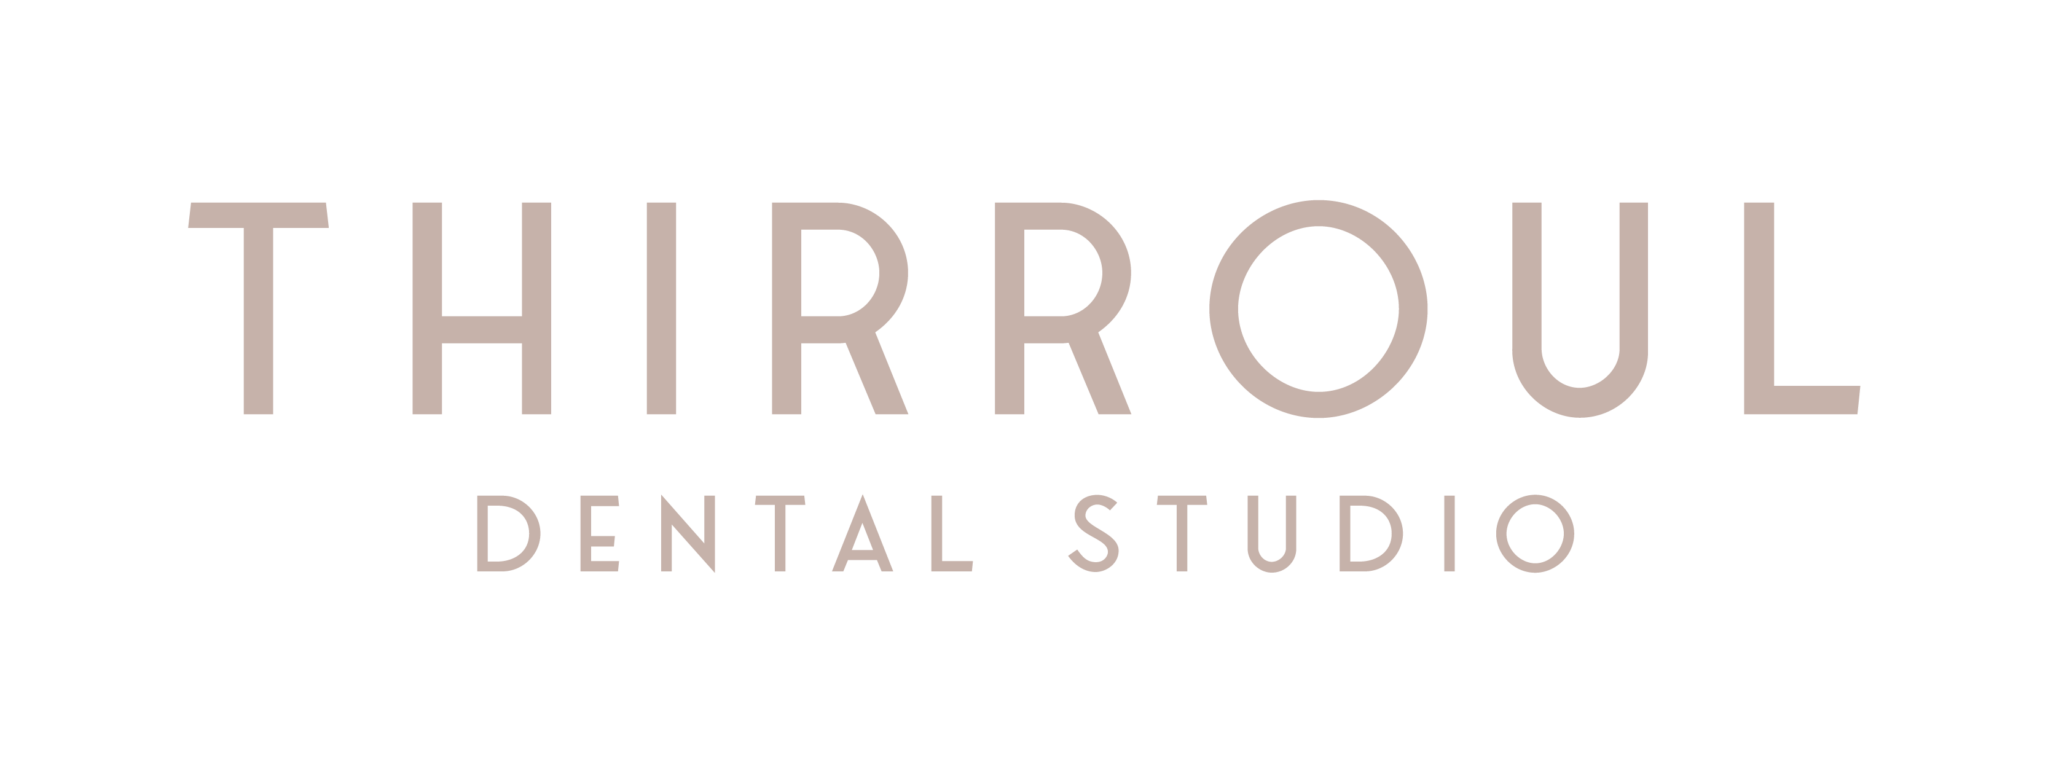 Thirroul-Dental.png